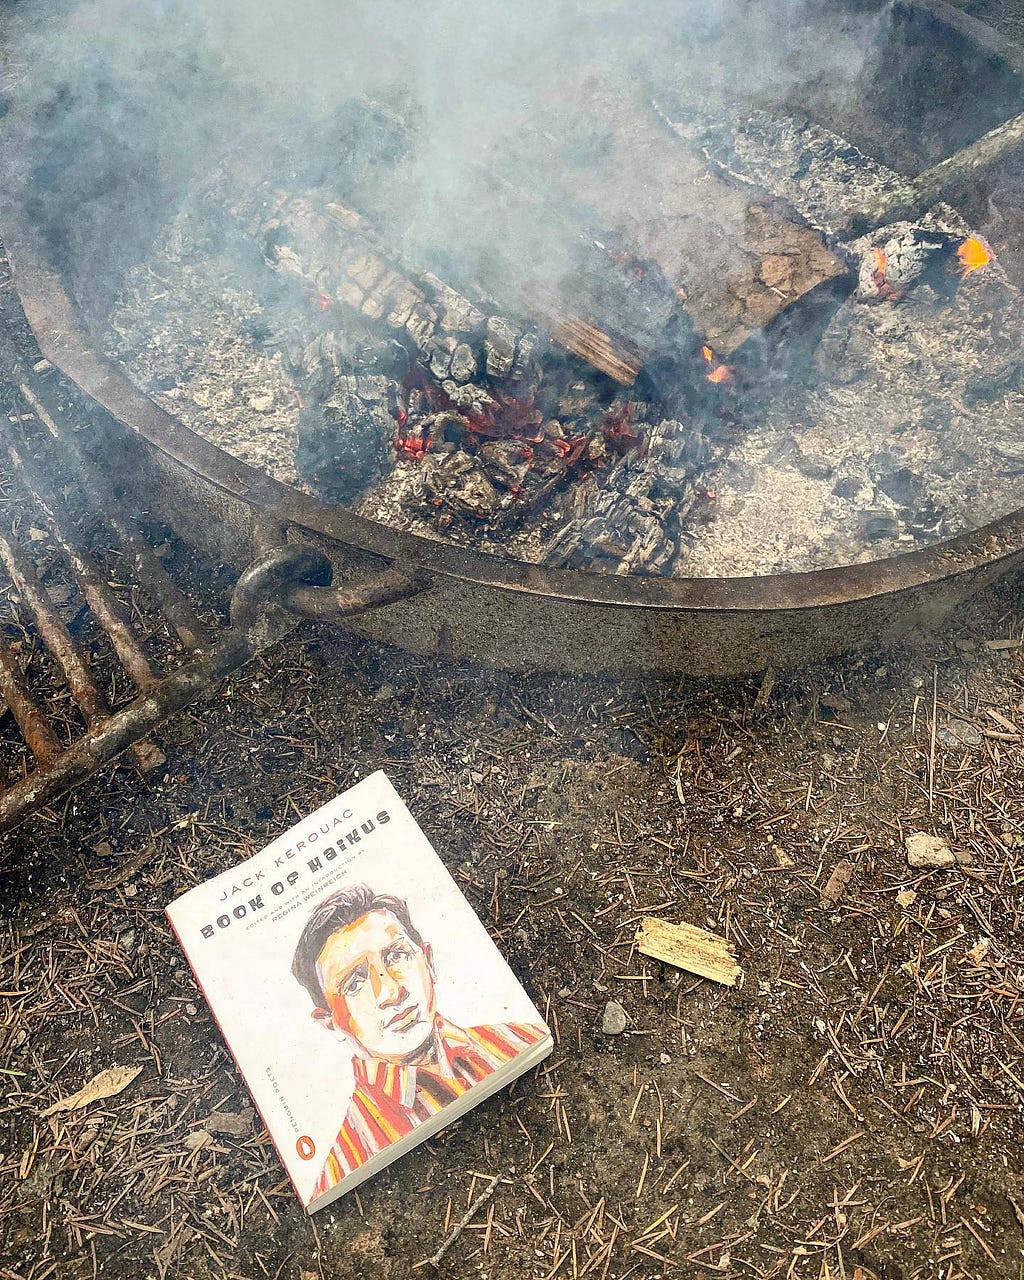 Book near campfire